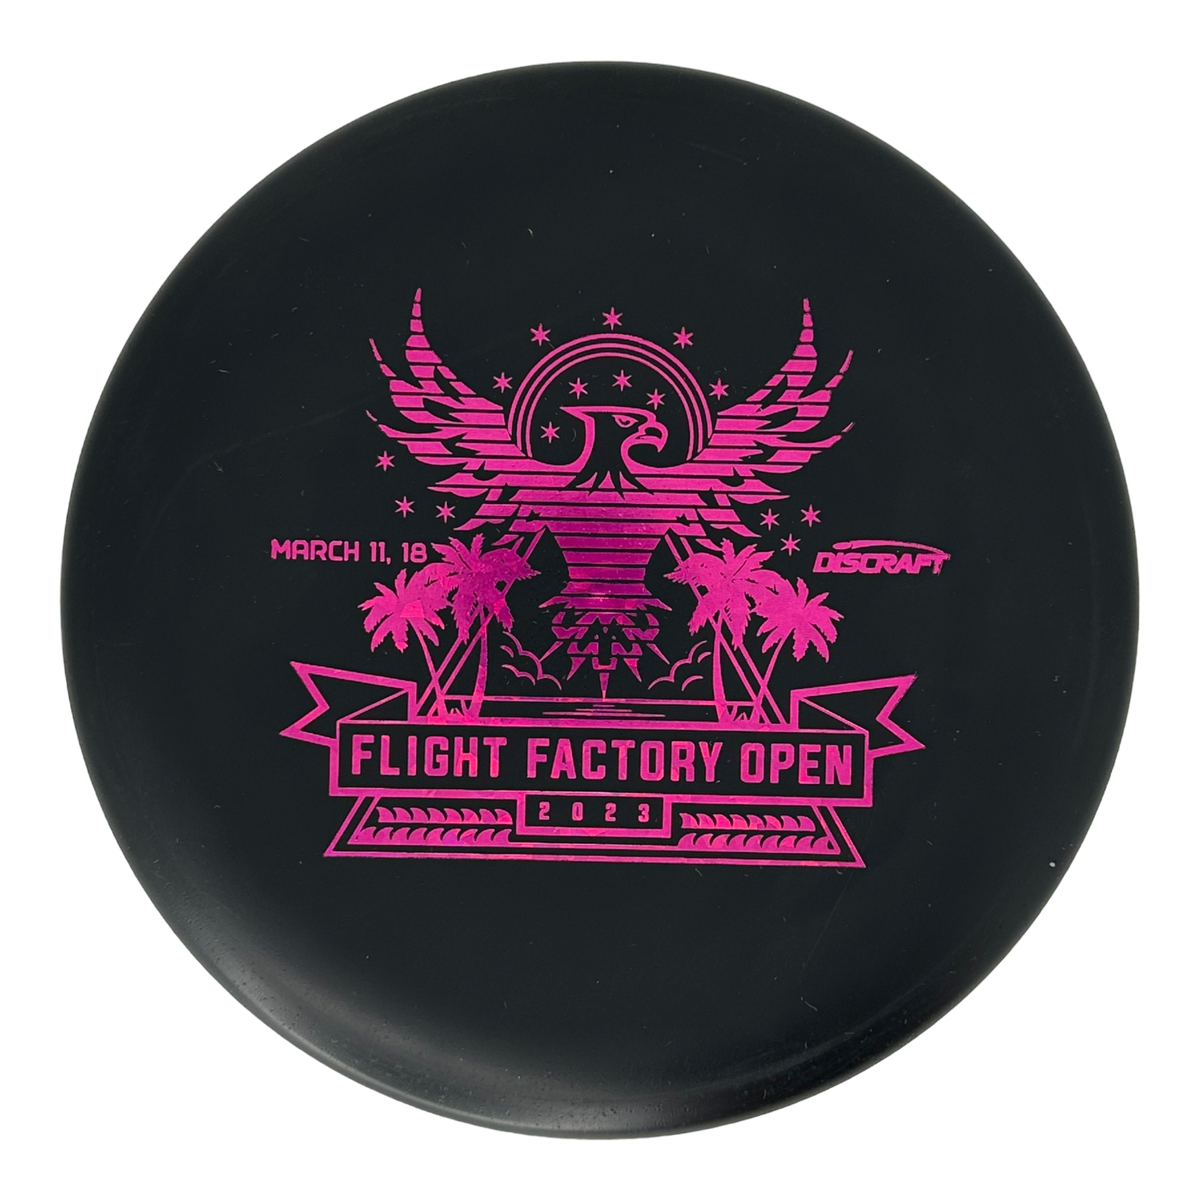 Discraft Paul Mcbeth Luna - Flight Factory Open (2023)